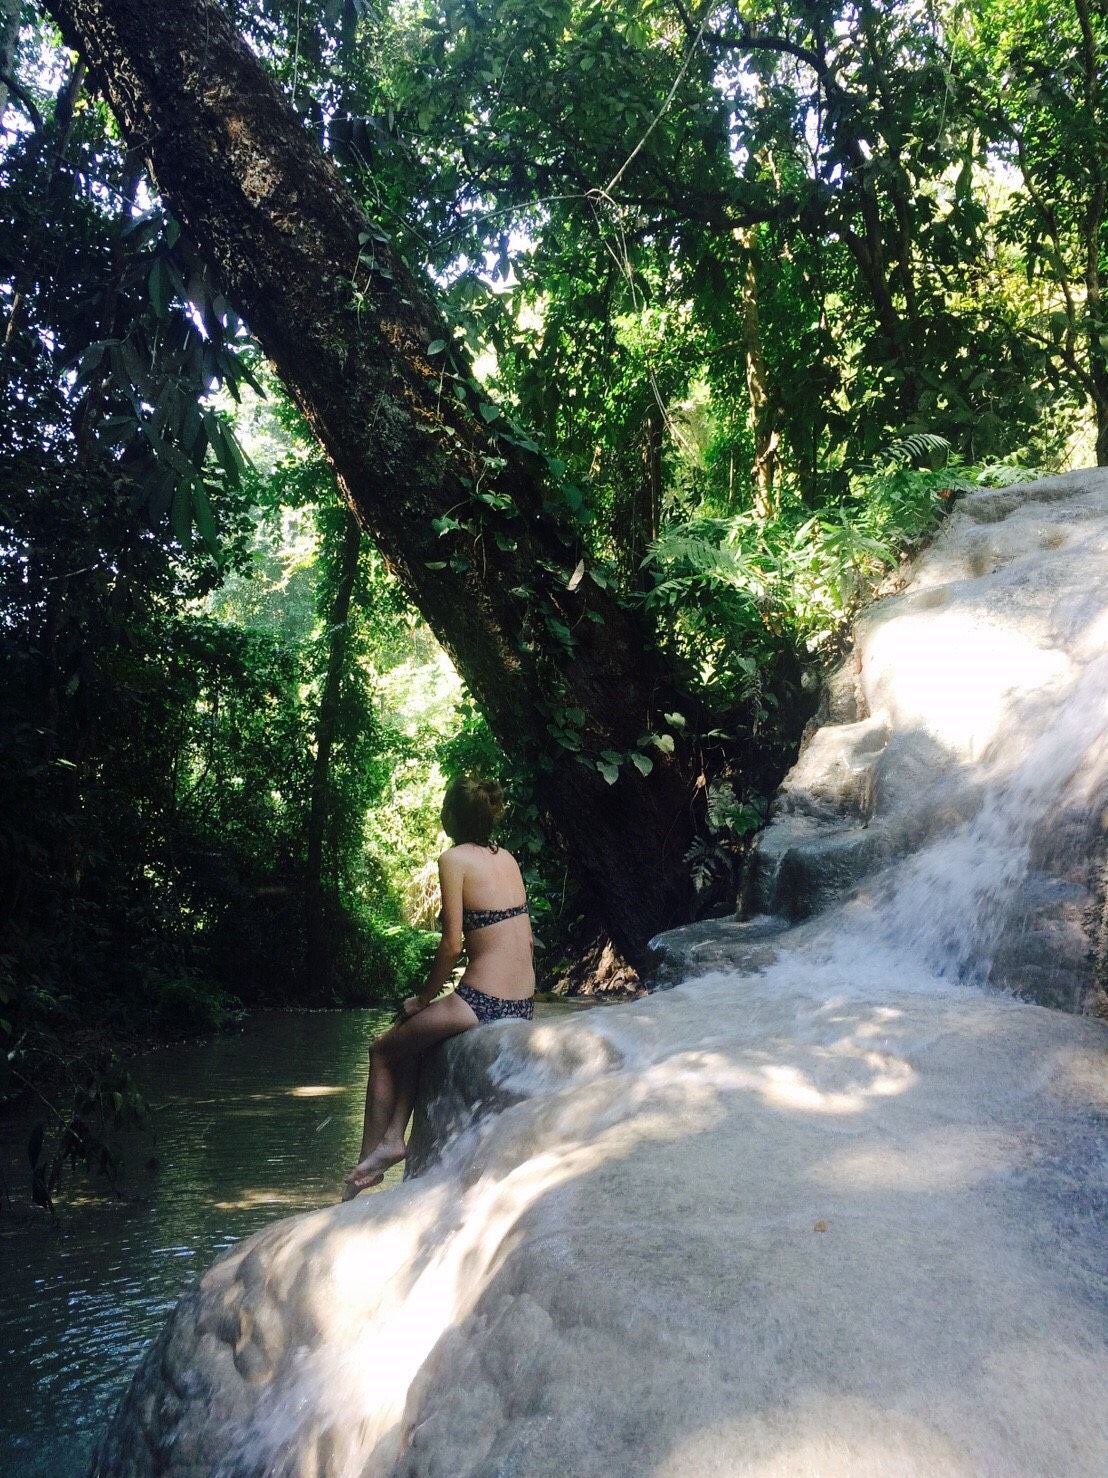 Bua Tong Sticky Waterfall Tour